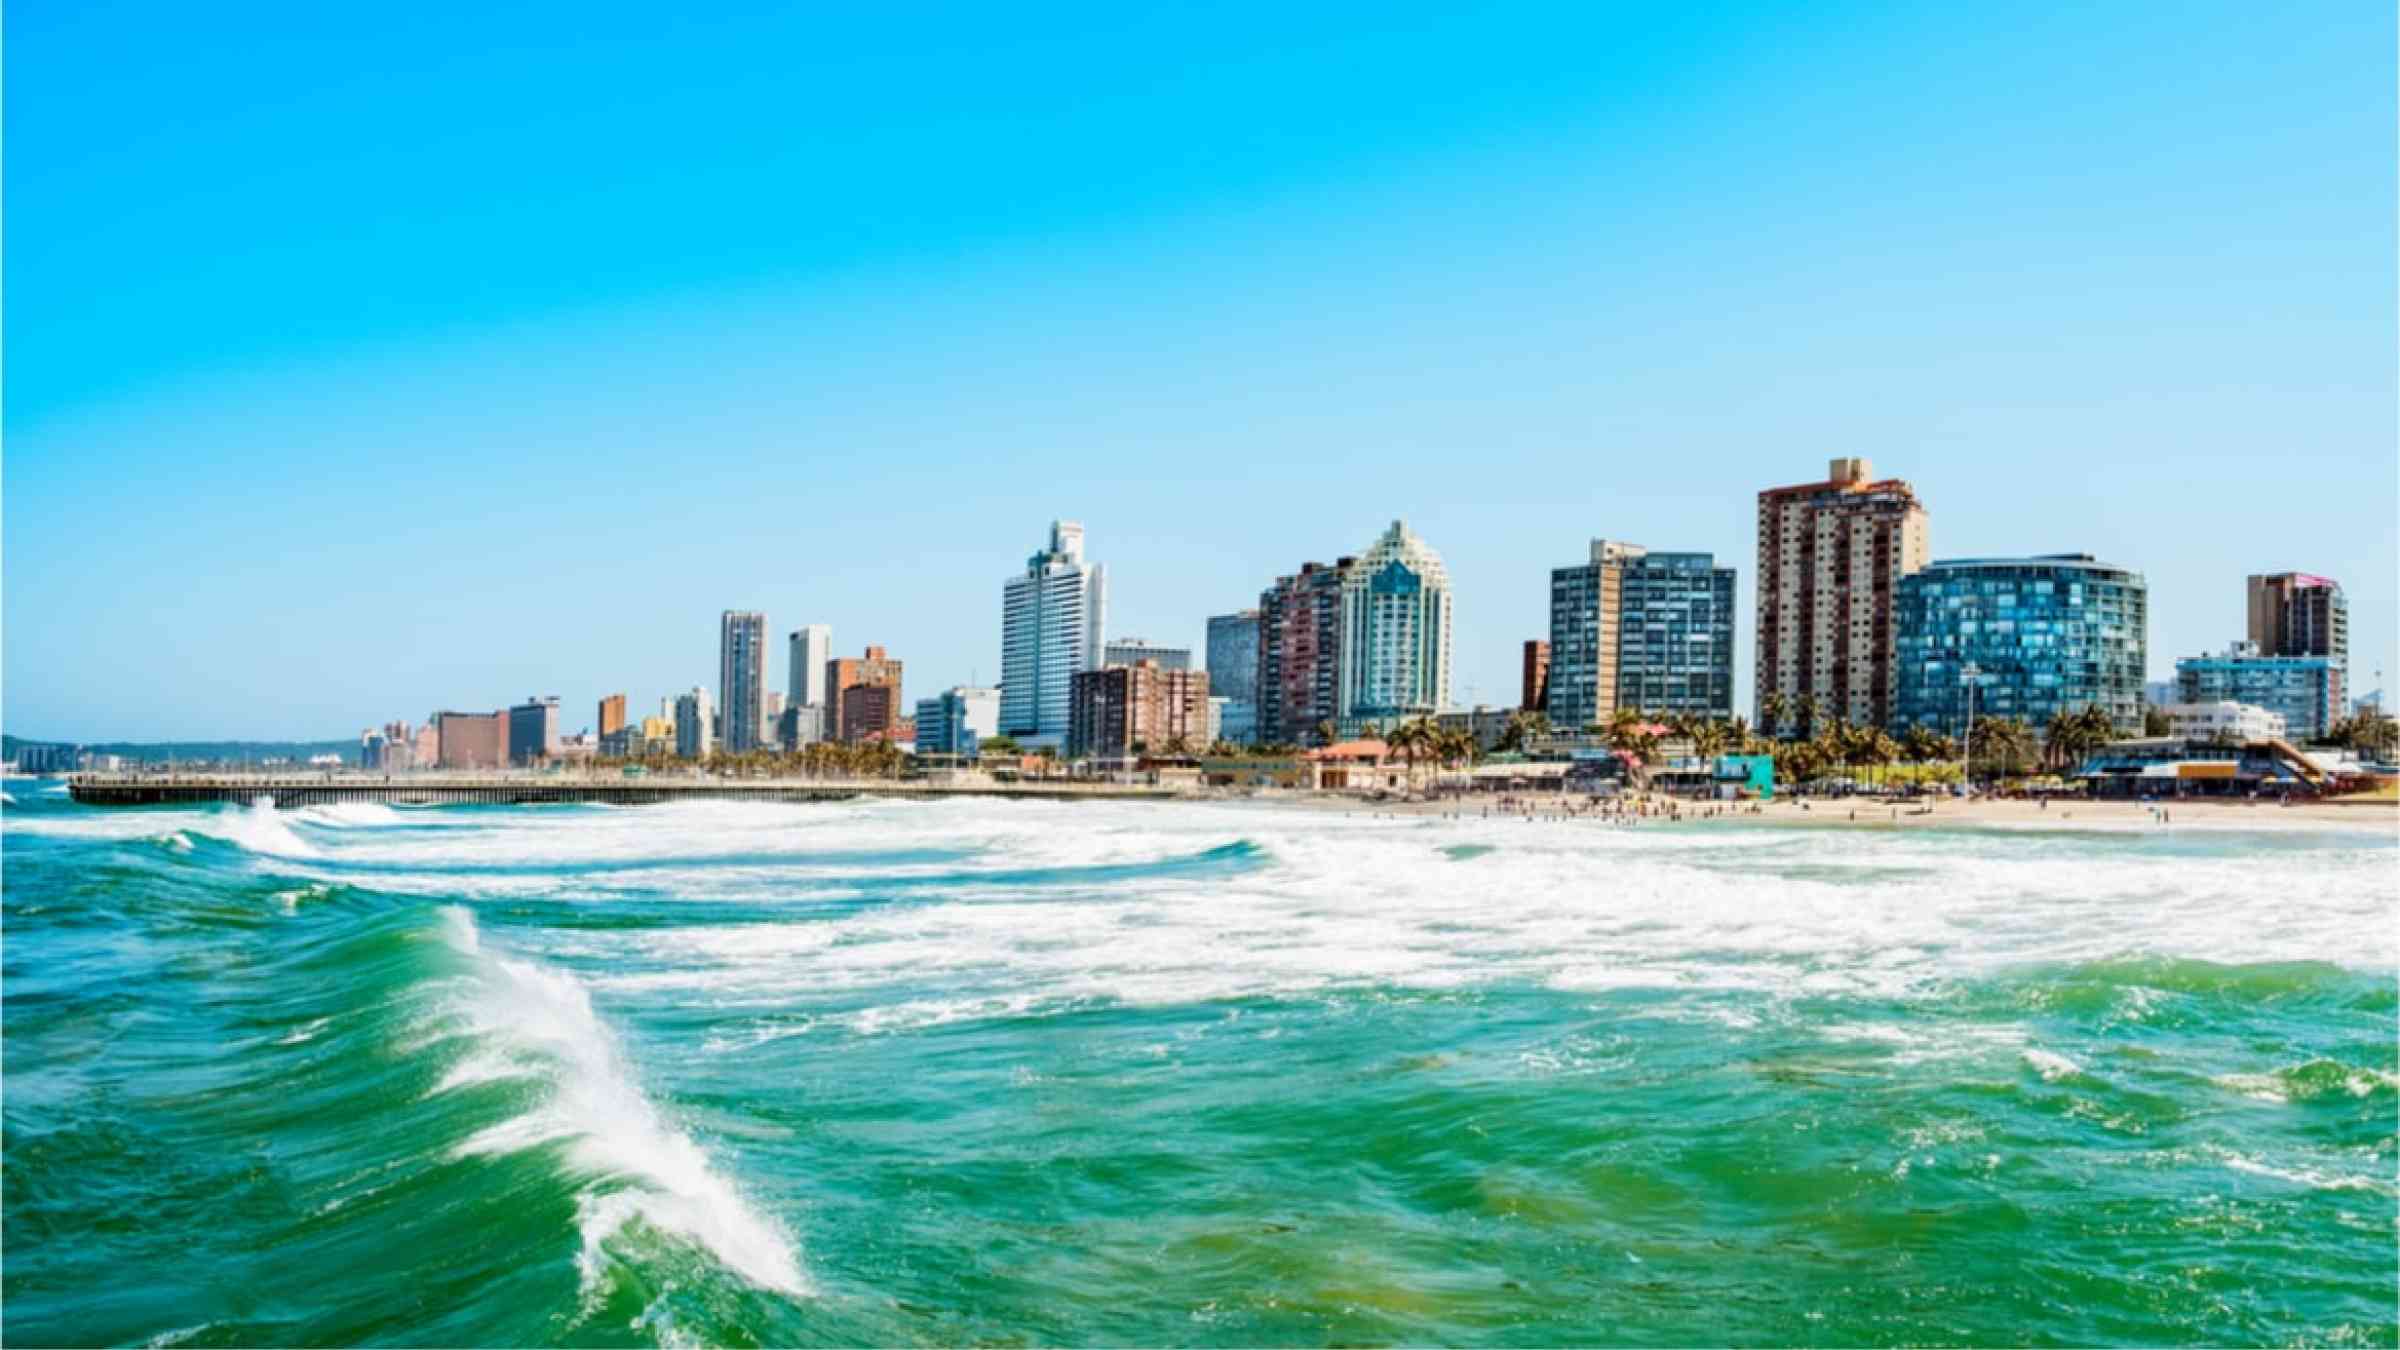 Coastline of Durban in South Africa.